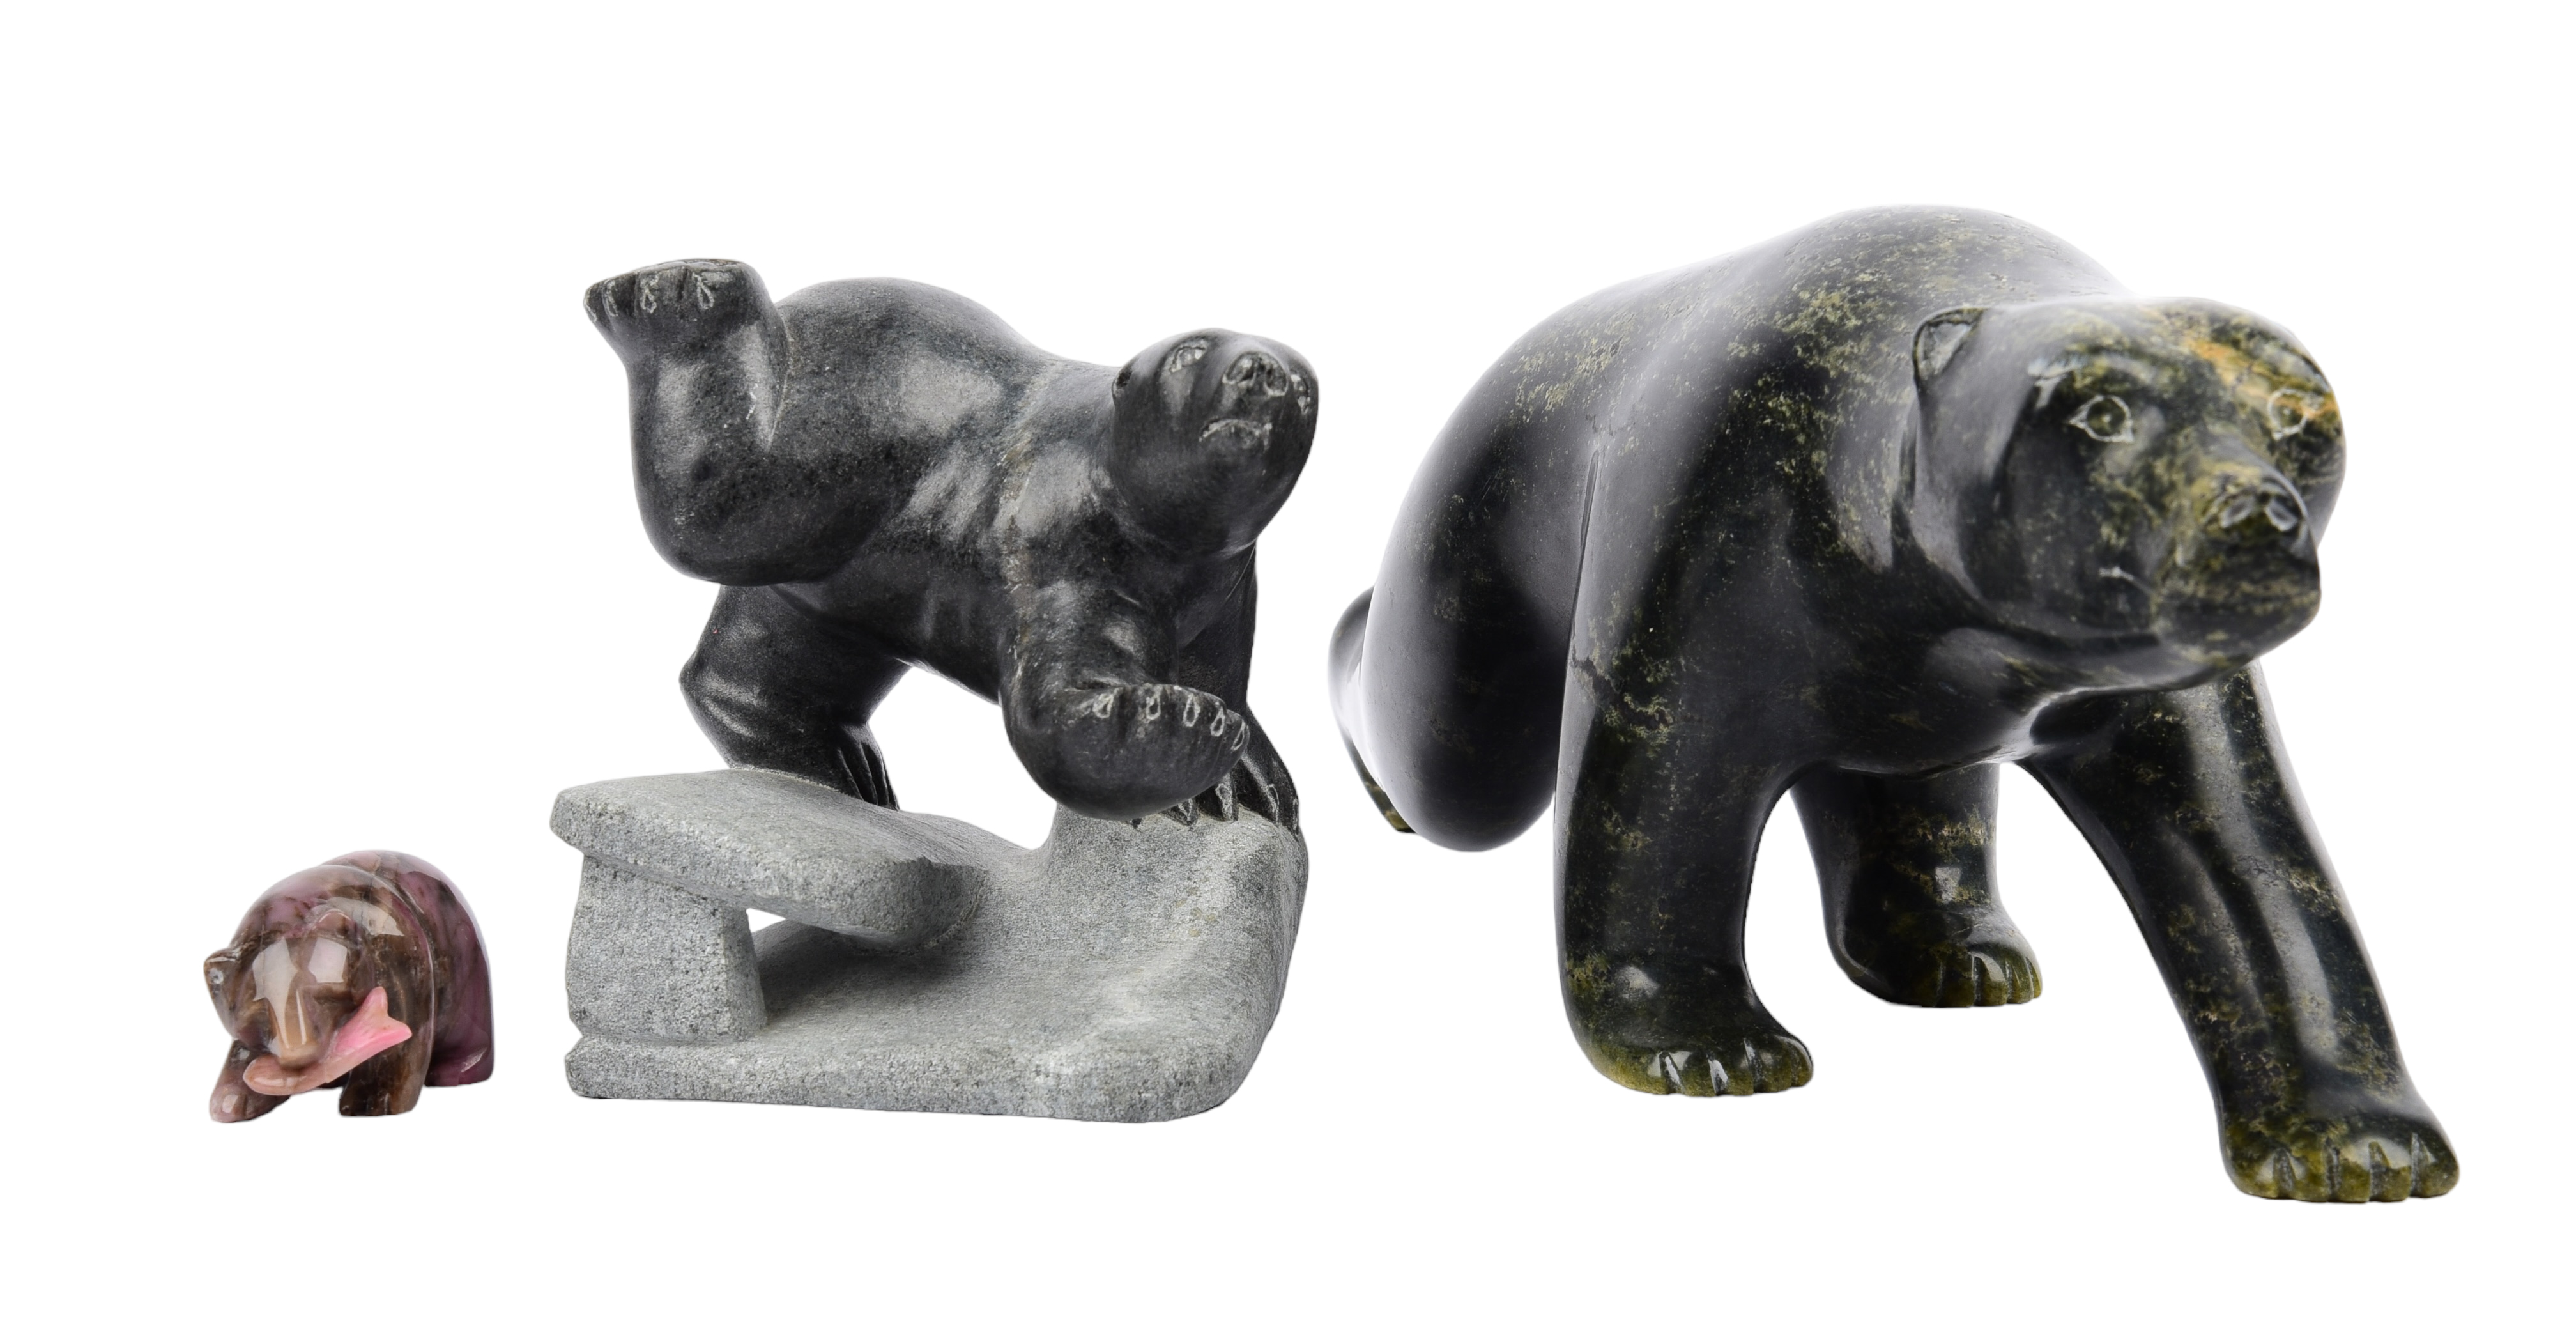  3 Inuit stone polar bear sculptures  3b103d